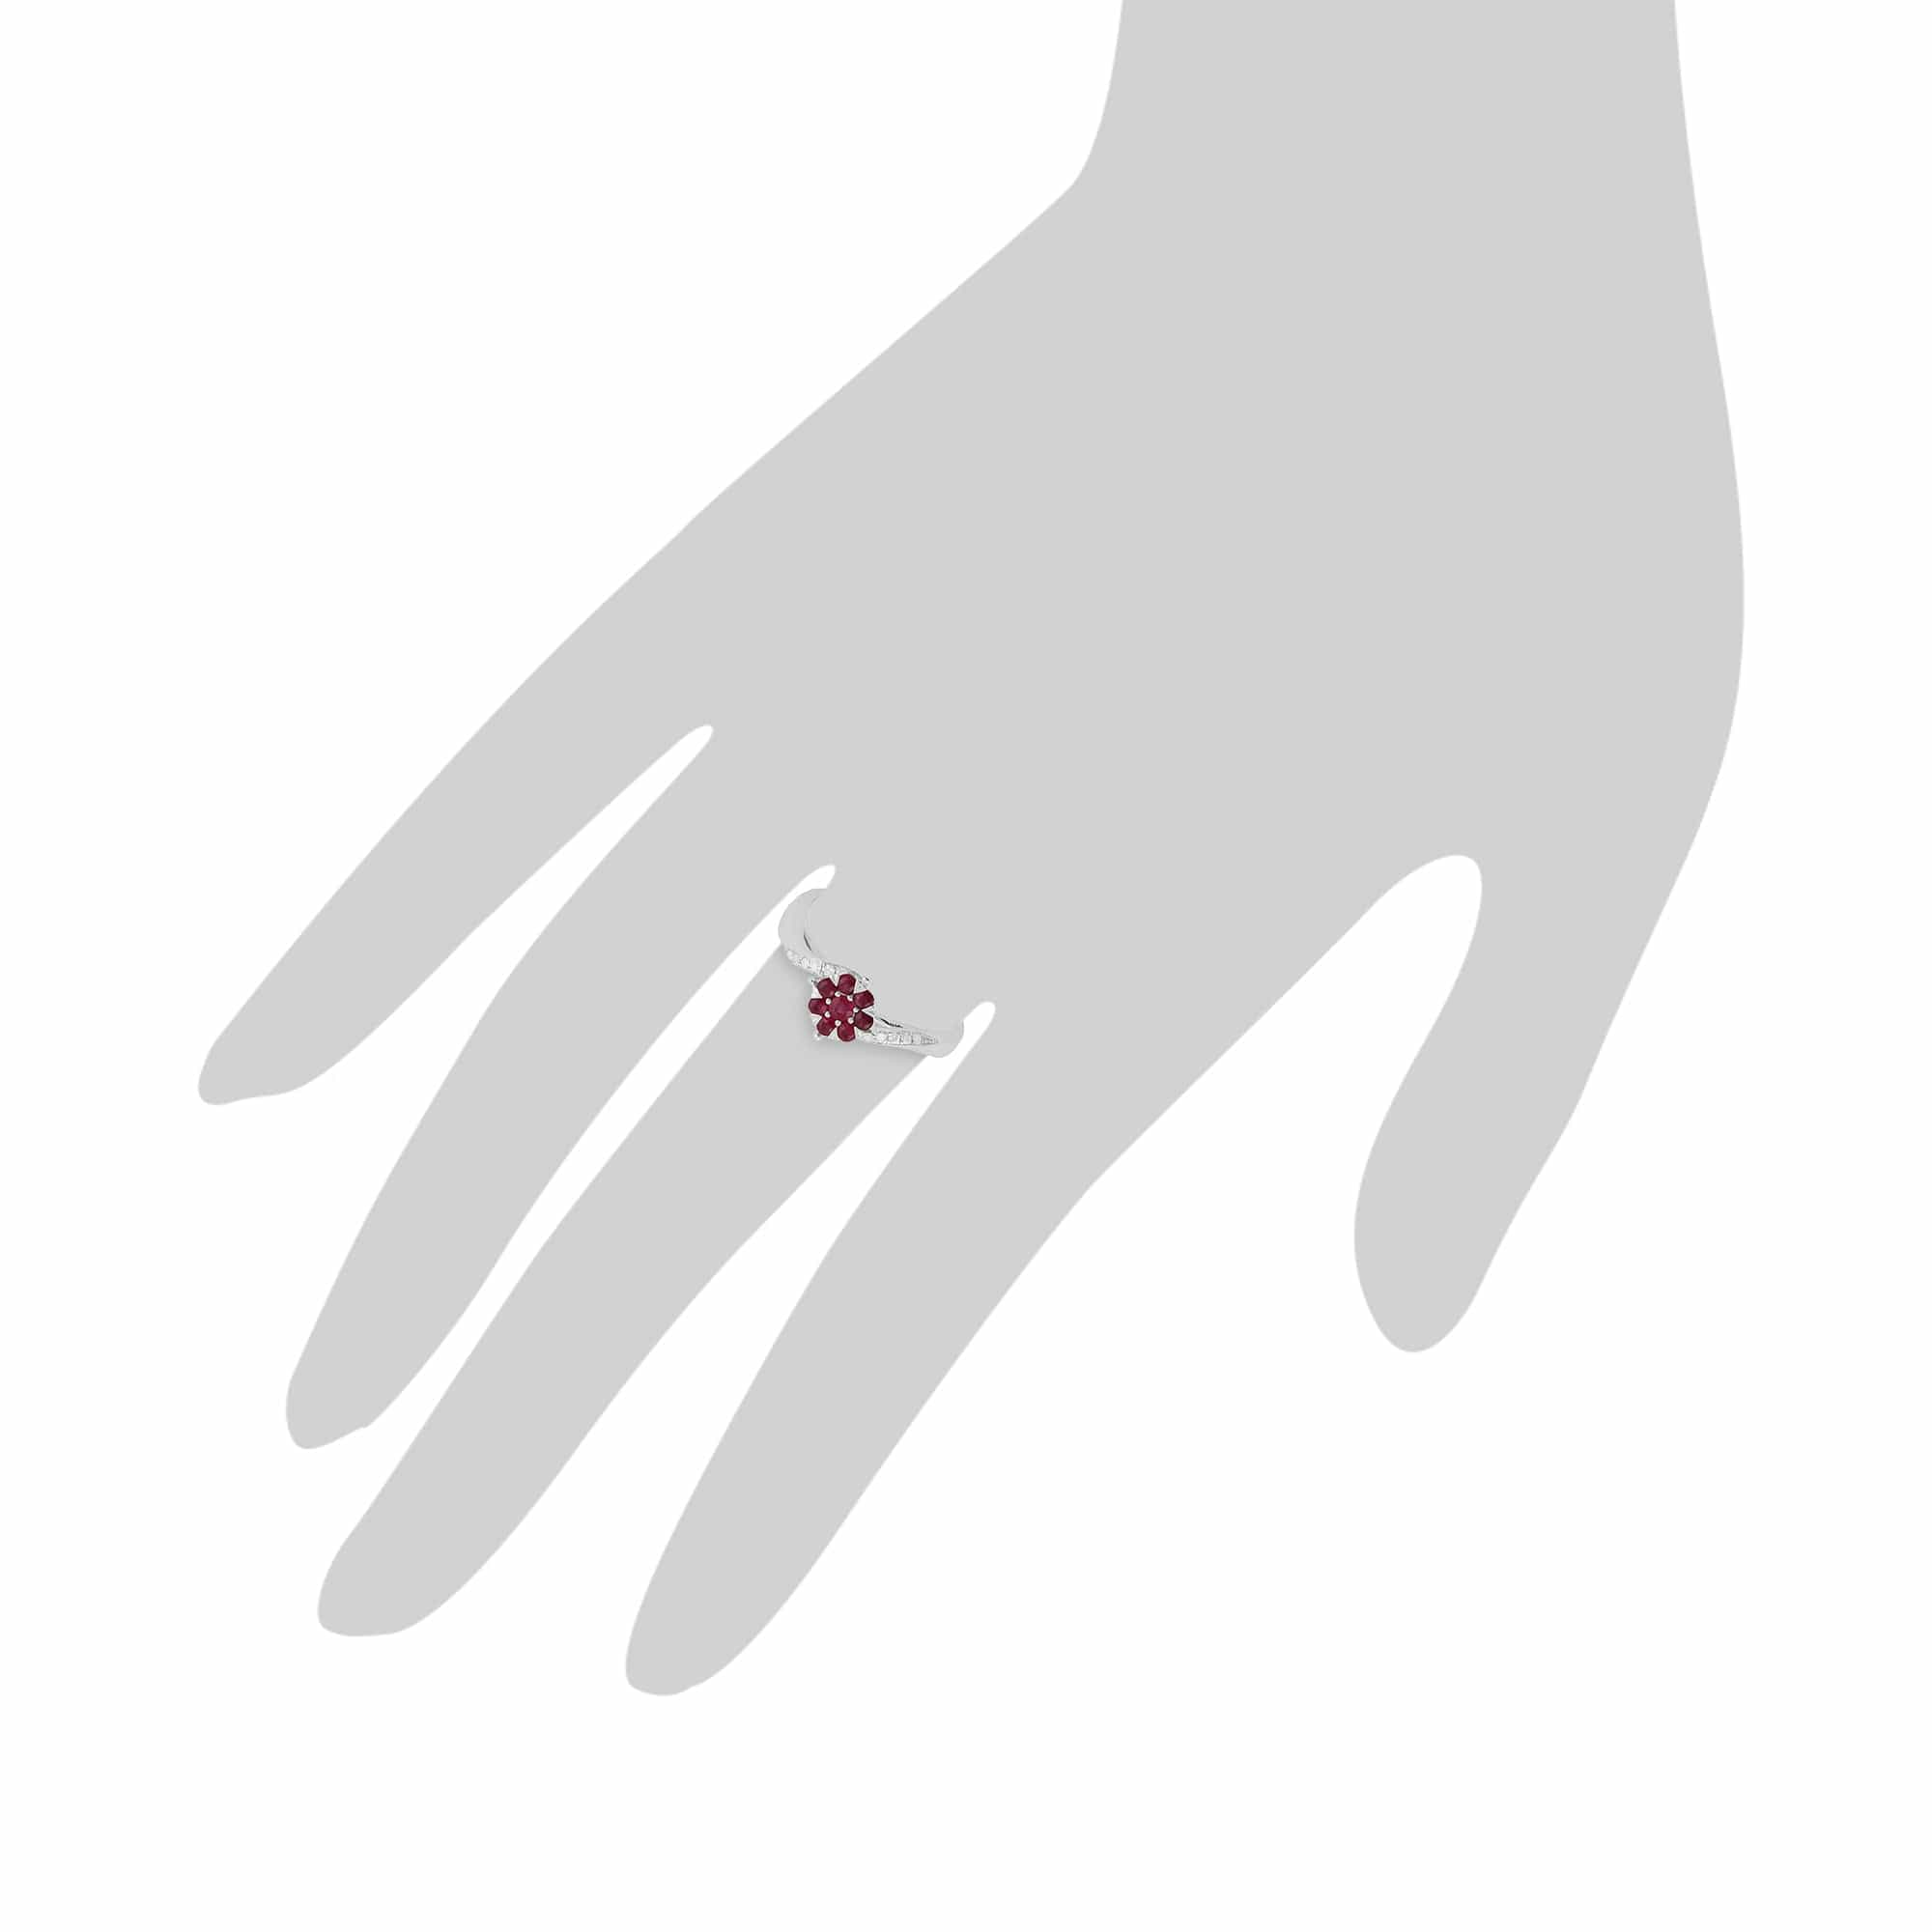 Gemondo 9ct White Gold 0.32ct Ruby & Diamond Floral Ring Image 3